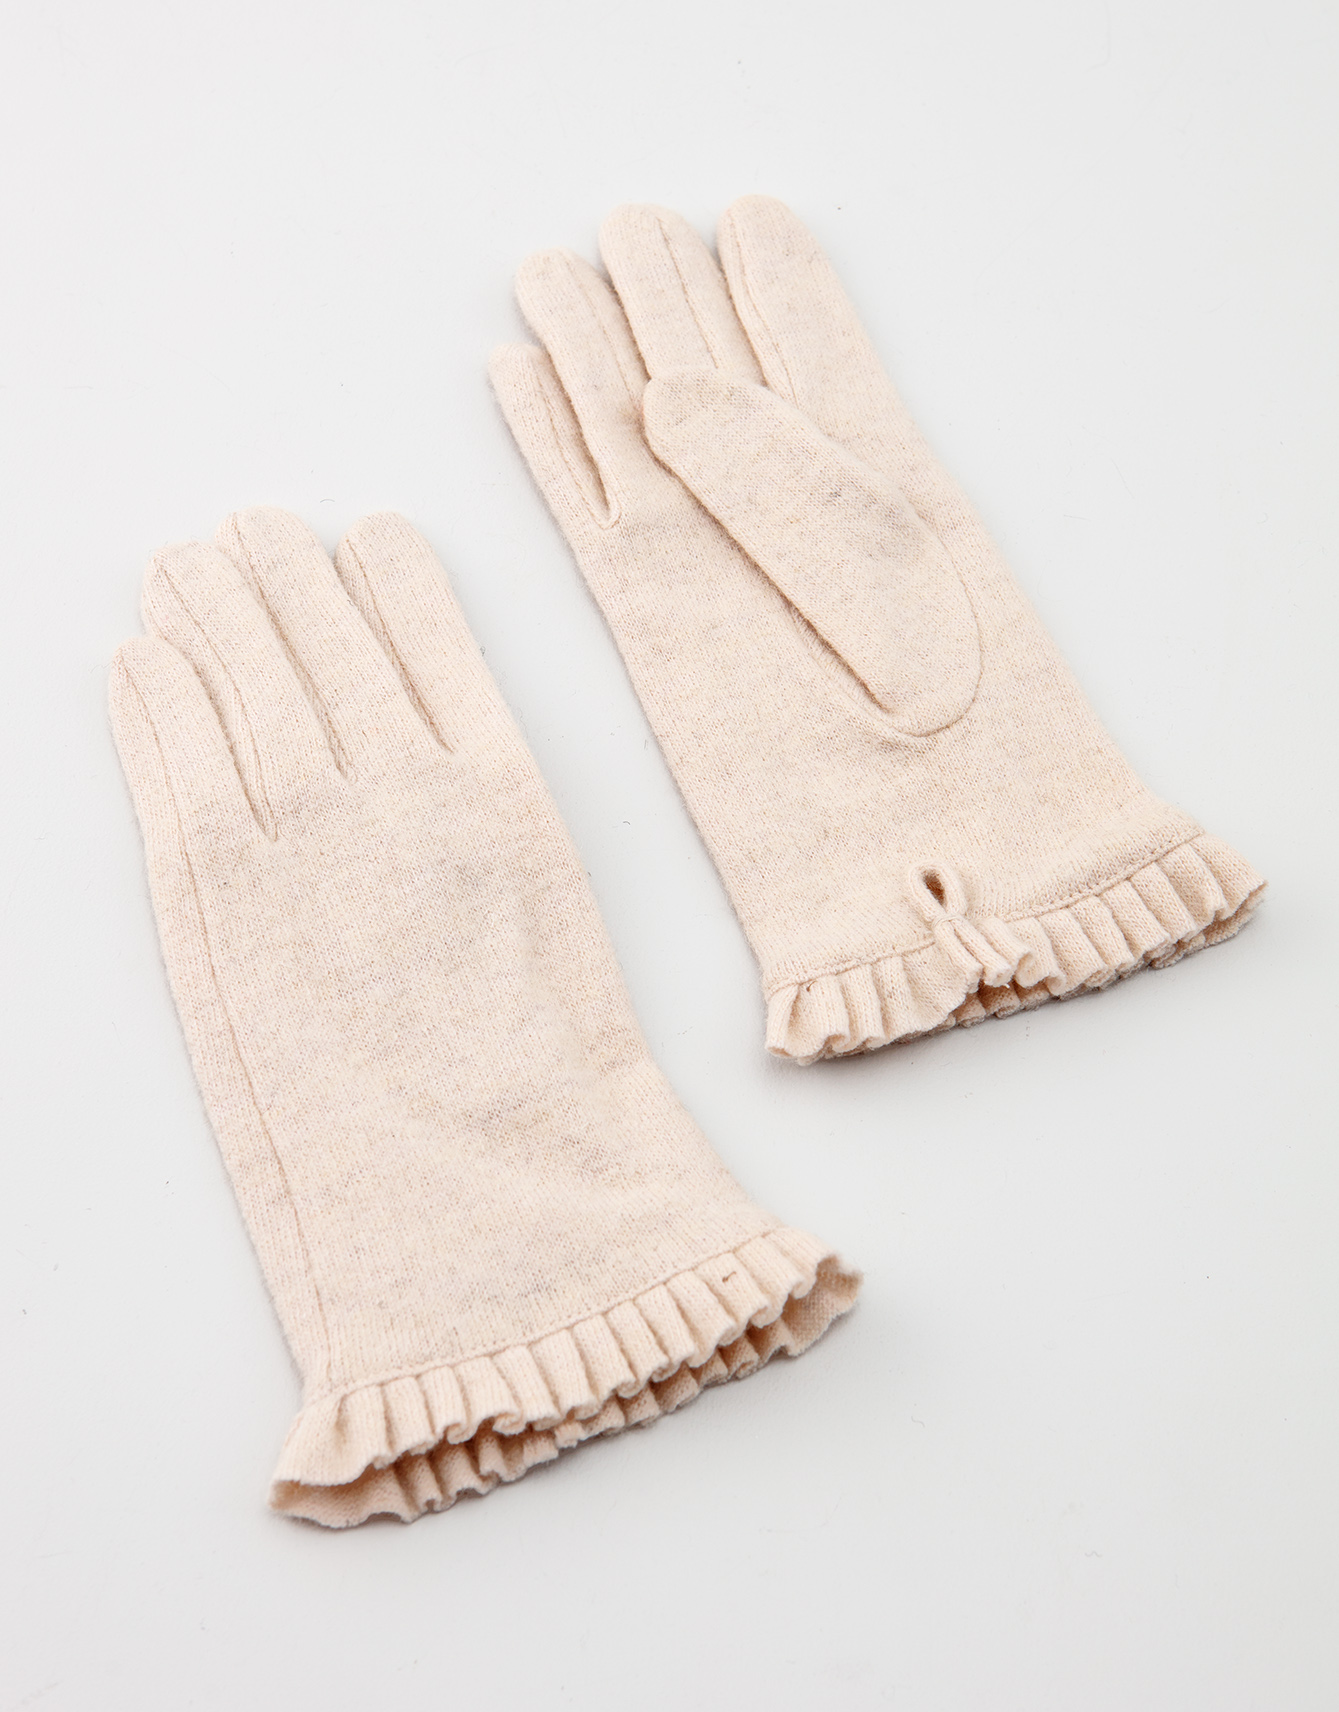 Wool mix gloves